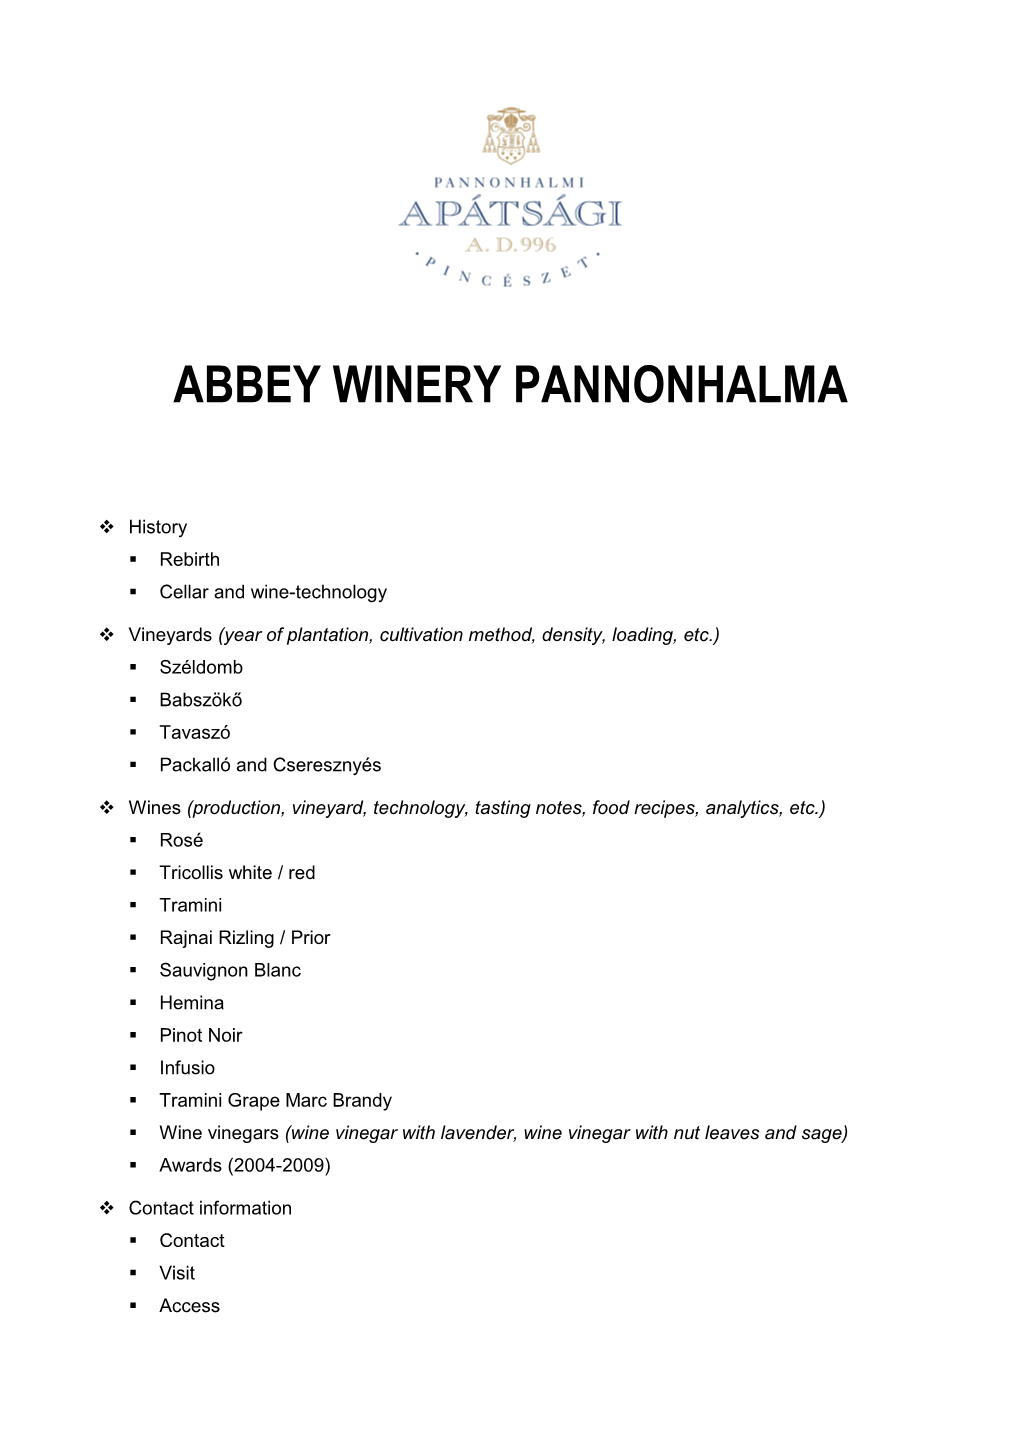 Abbey Winery Pannonhalma